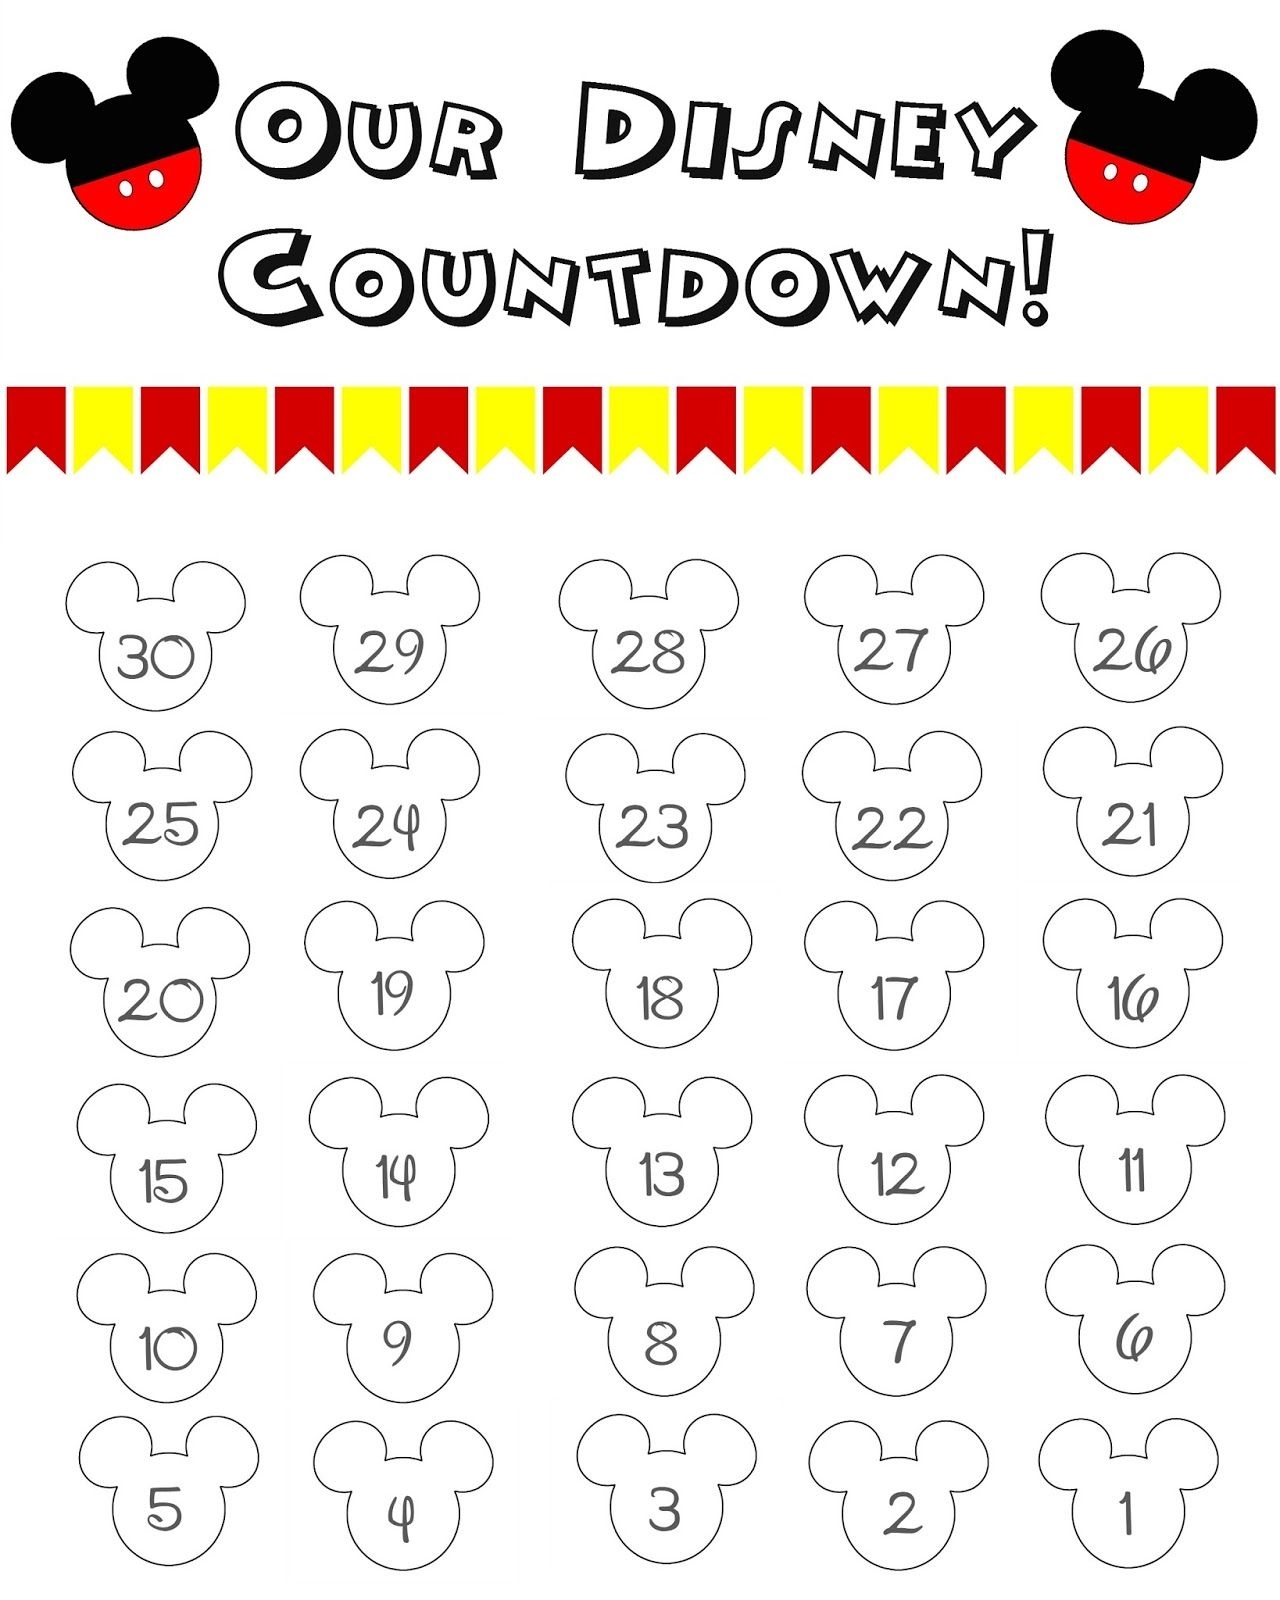 Disney World Countdown Calendar - Free Printable | Disney Dashing Count Down To Disney Printables